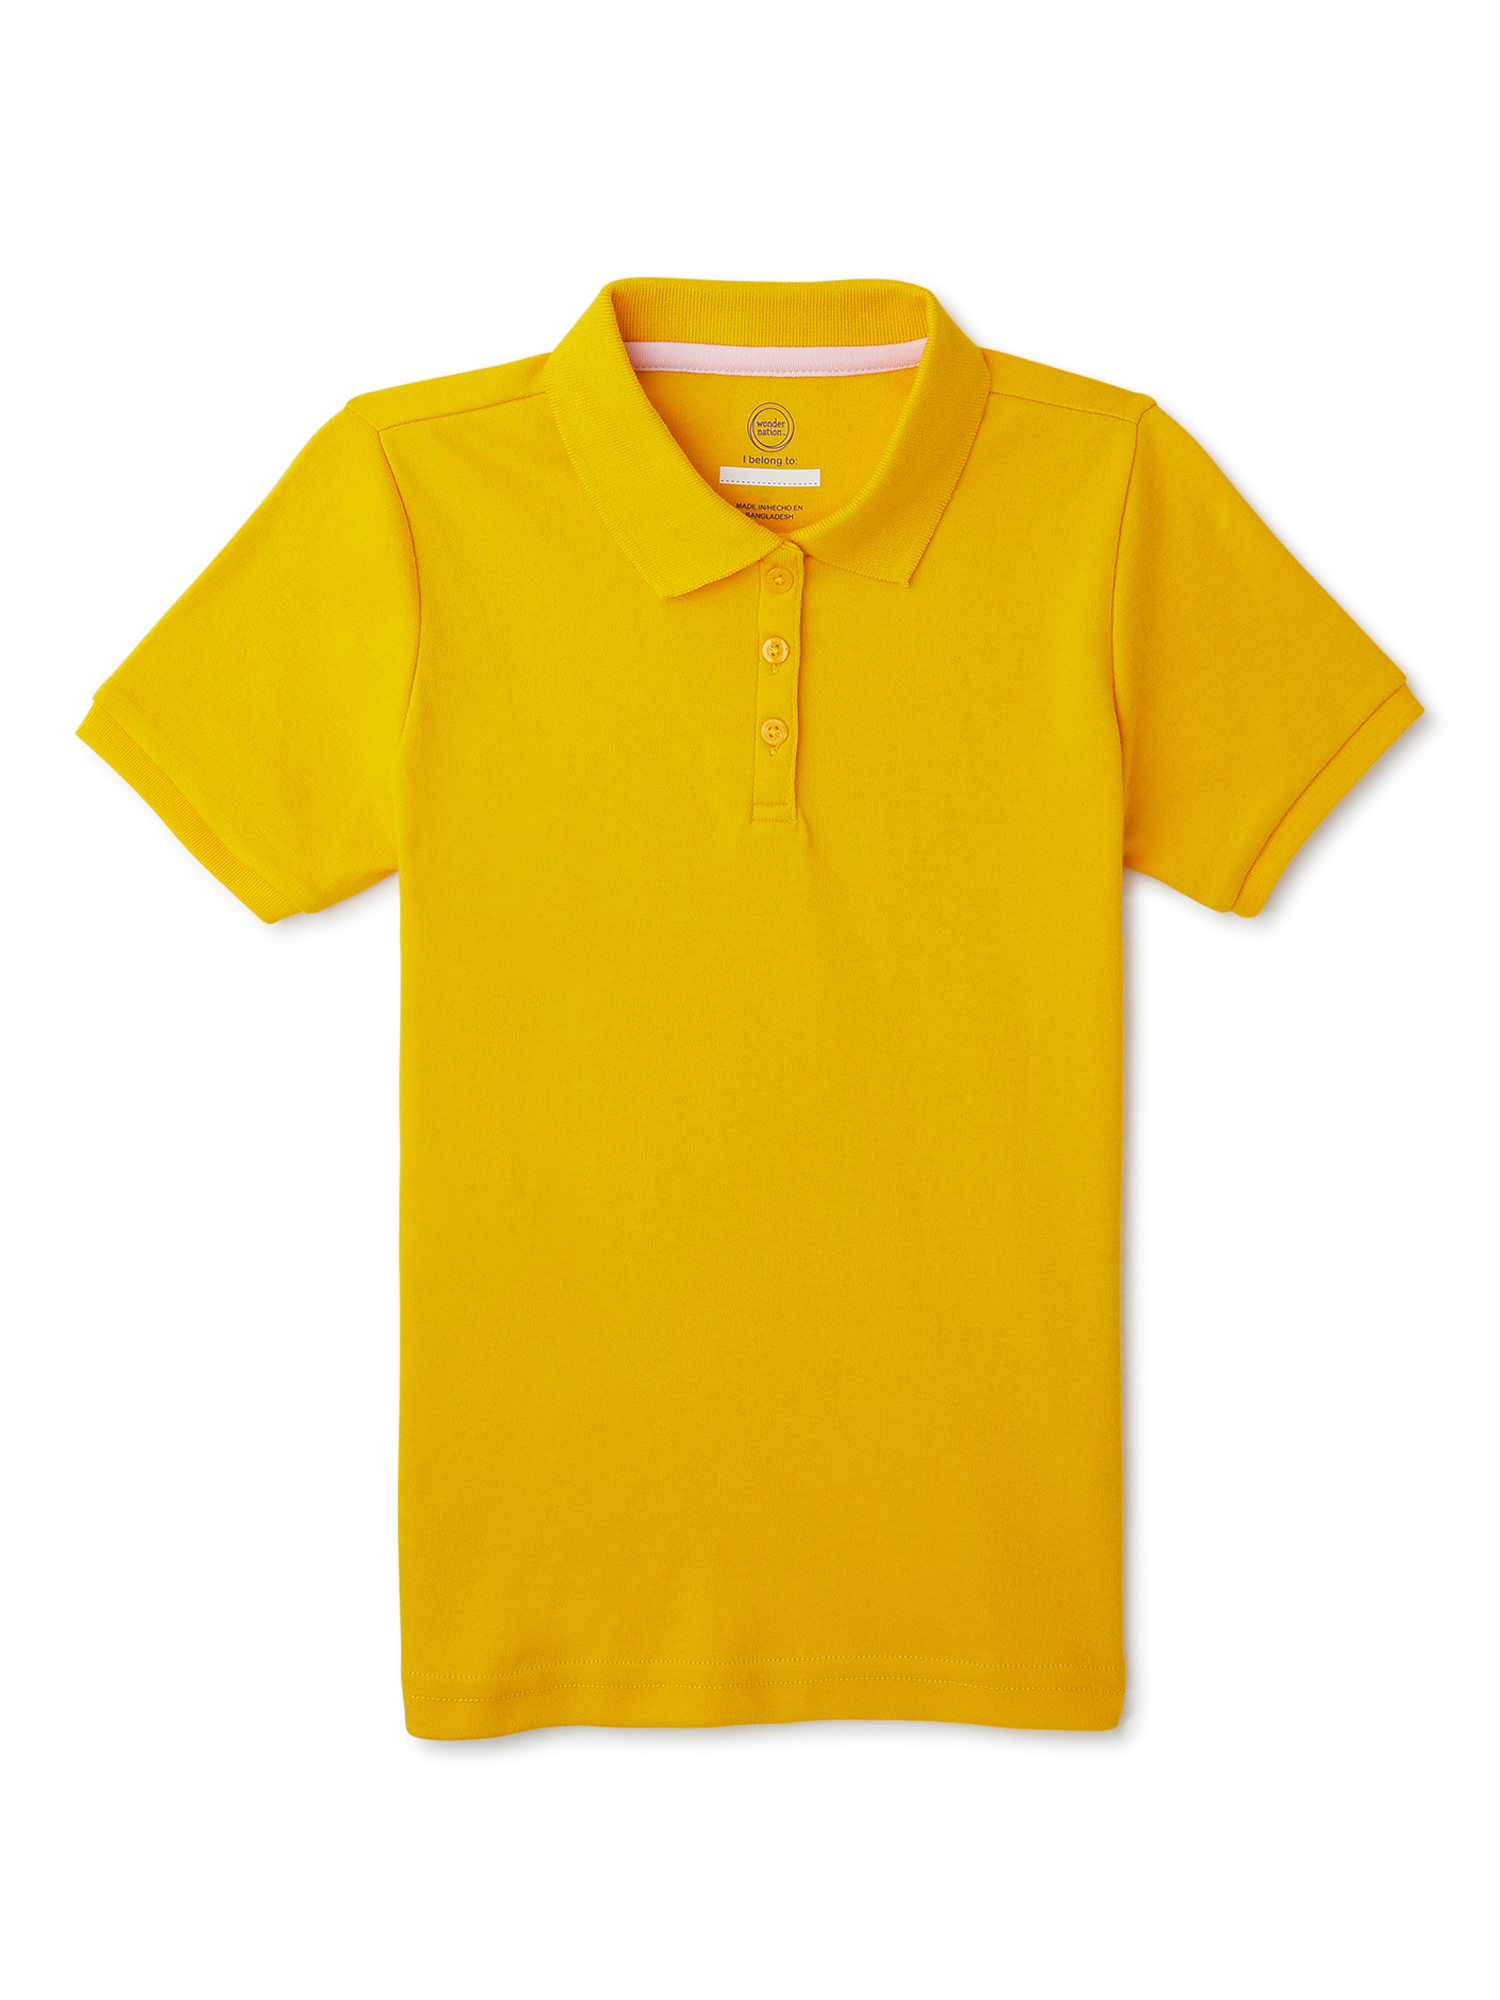 School Uniforms | Boys' & Girls' Uniforms | Back to School | Walmart.com